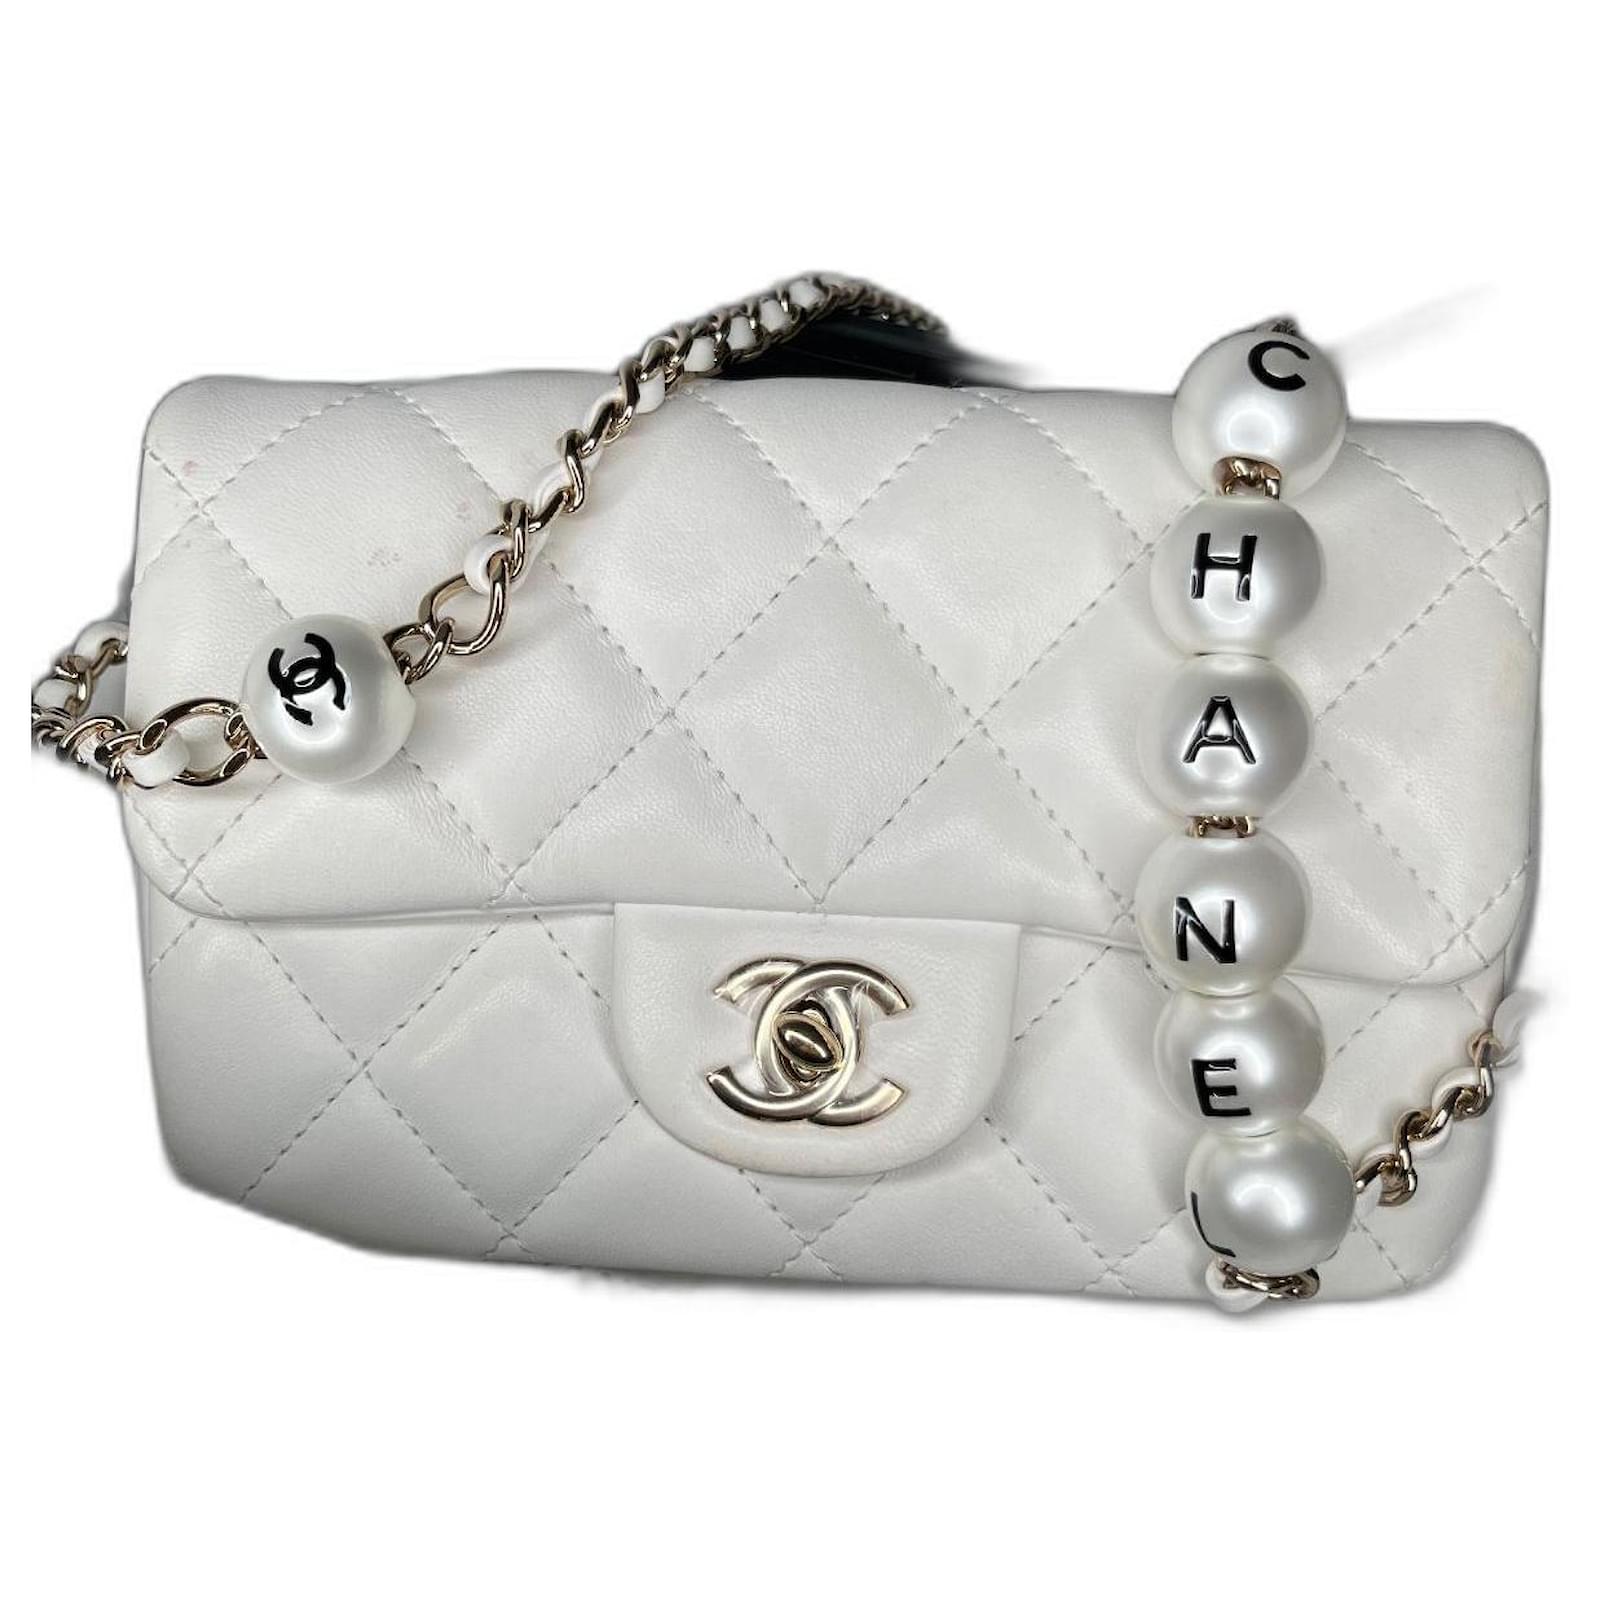 Chanel 1997-1999 Mini Square Flap Shoulder Bag White